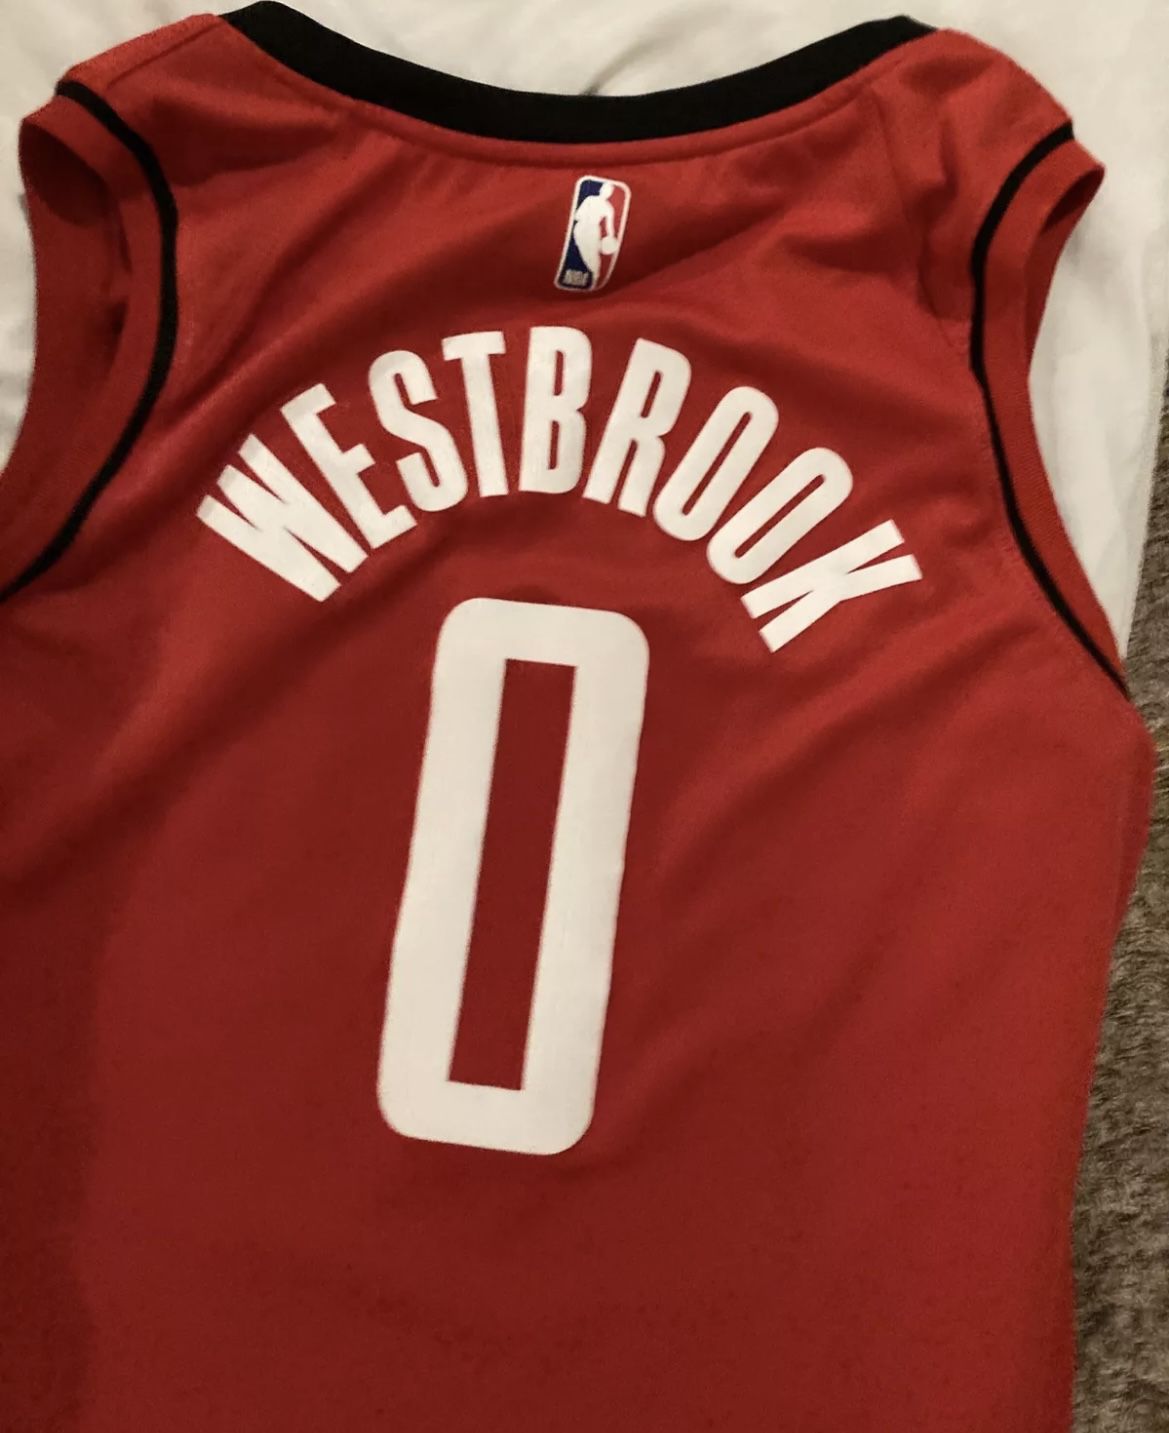 Westbrook in Basketball Jerseys for sale